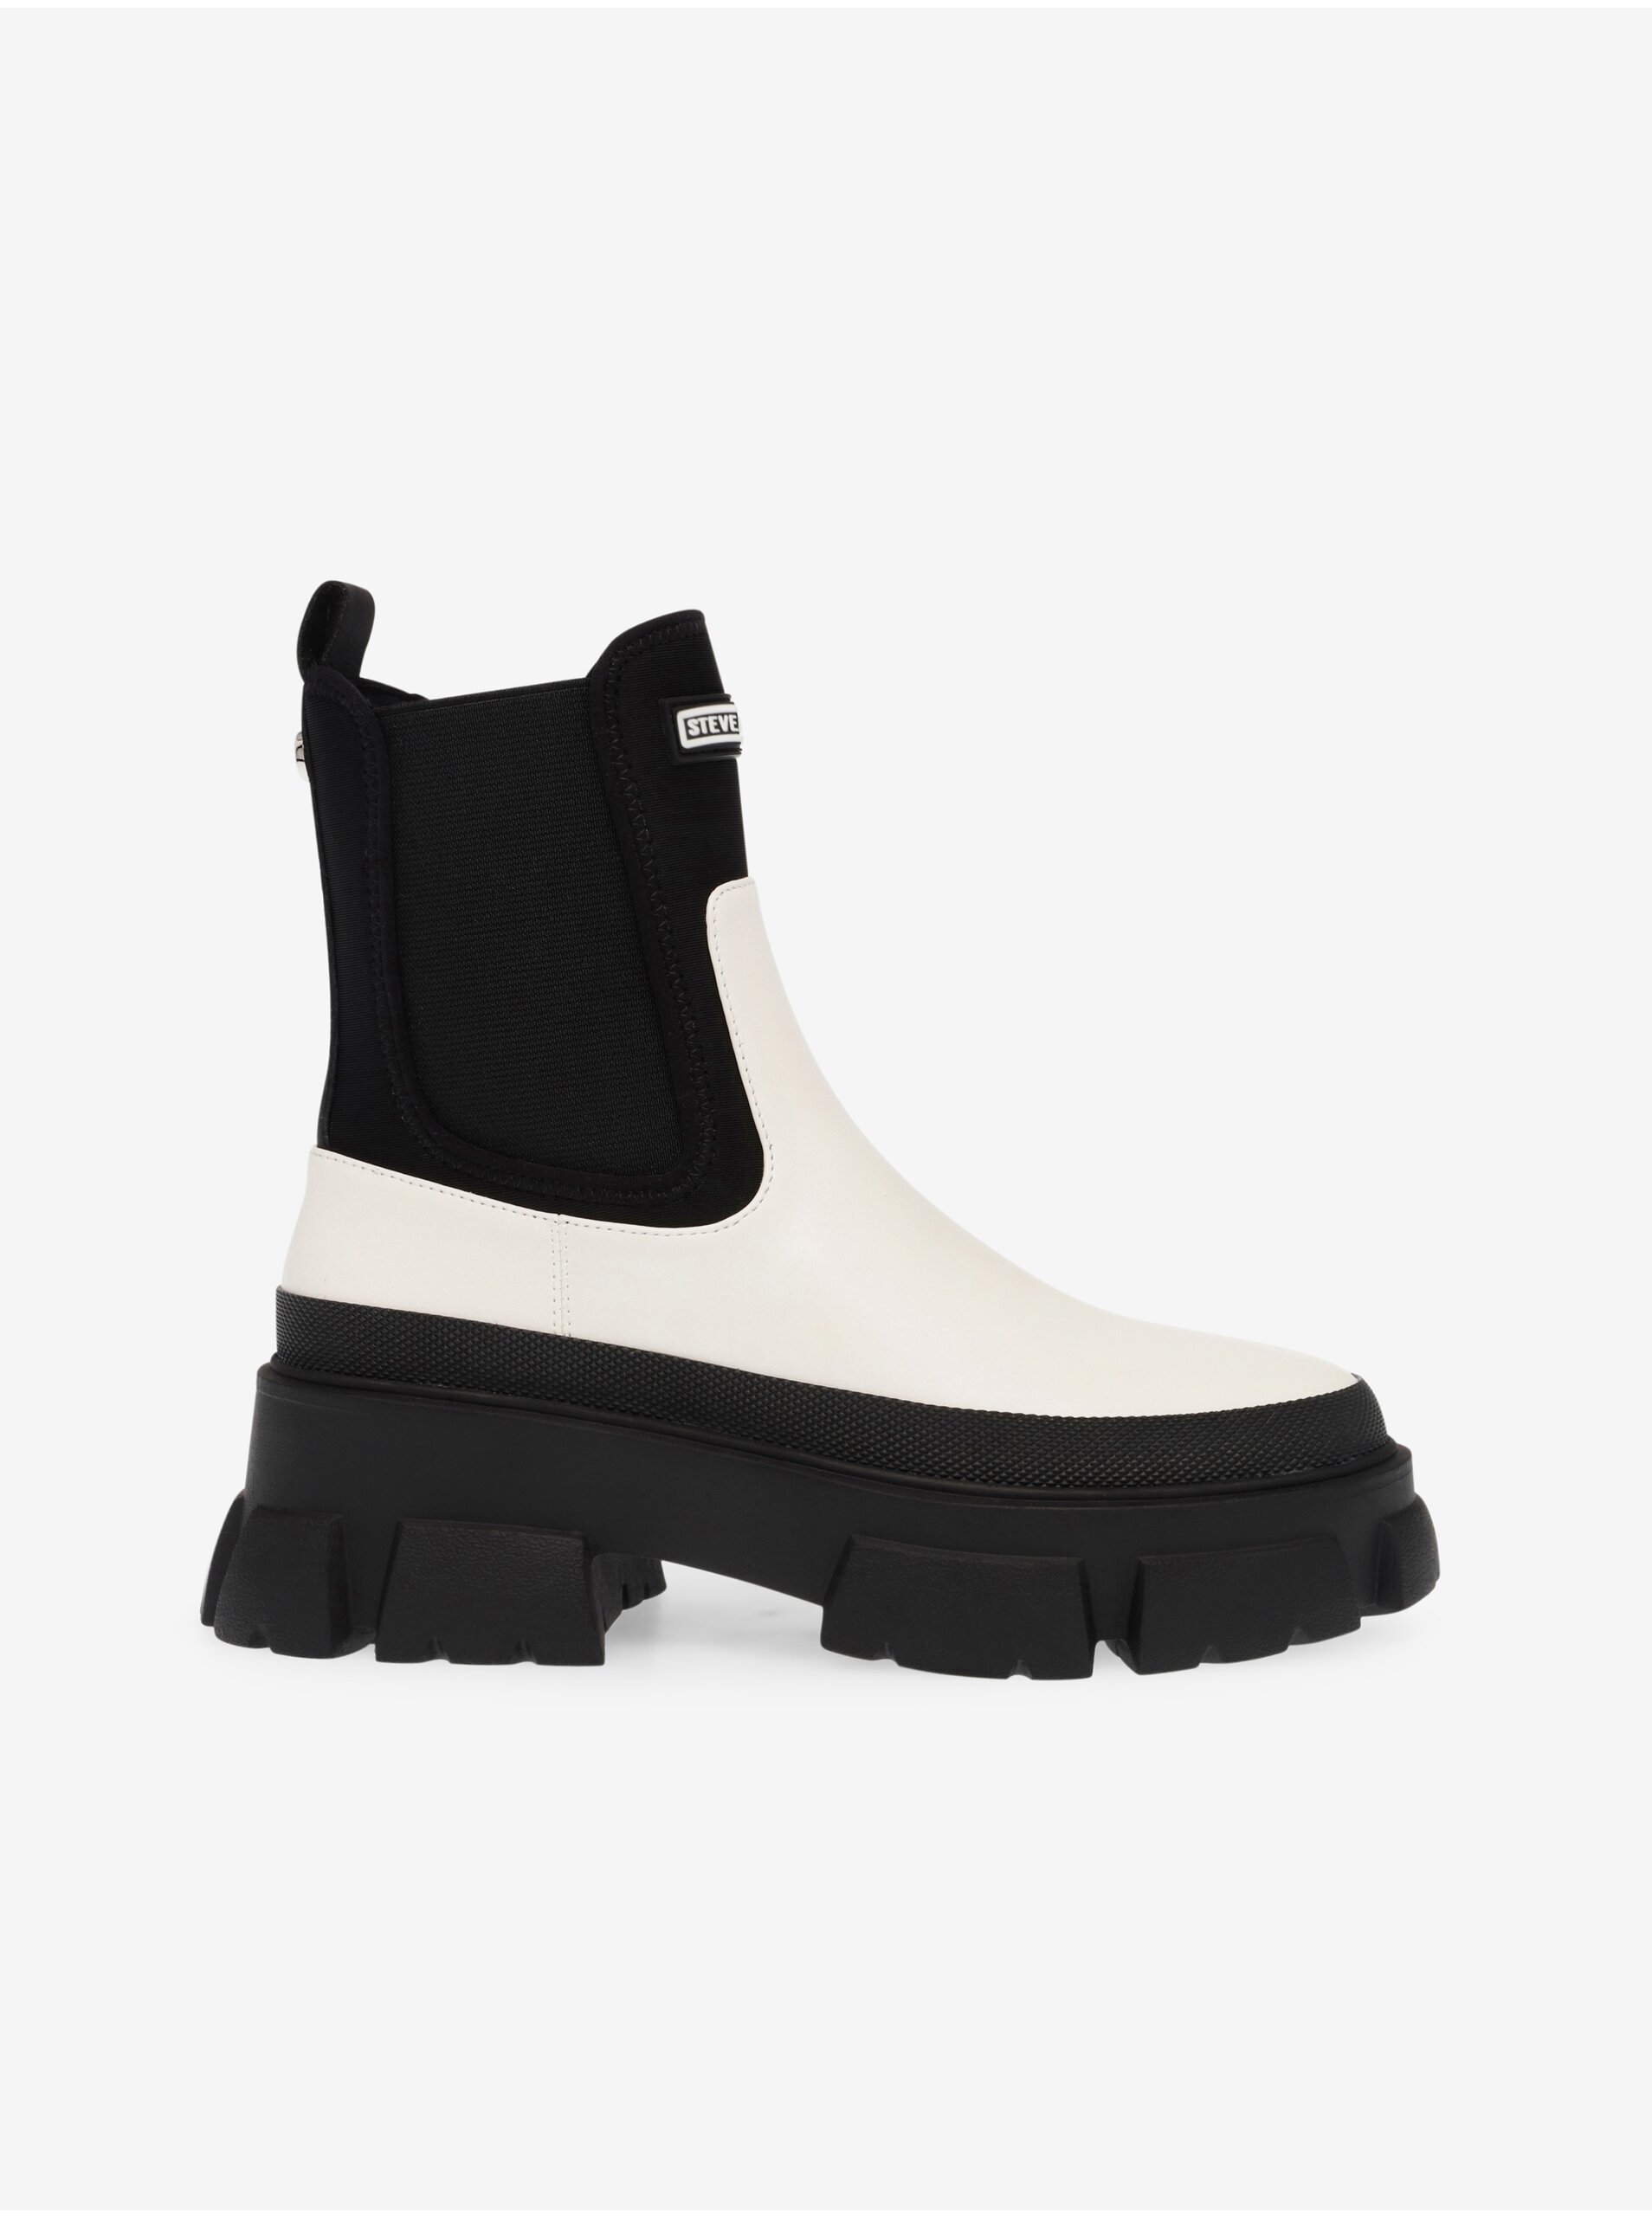 E-shop Čierno-biele dámske kožené chelsea topánky Steve Madden